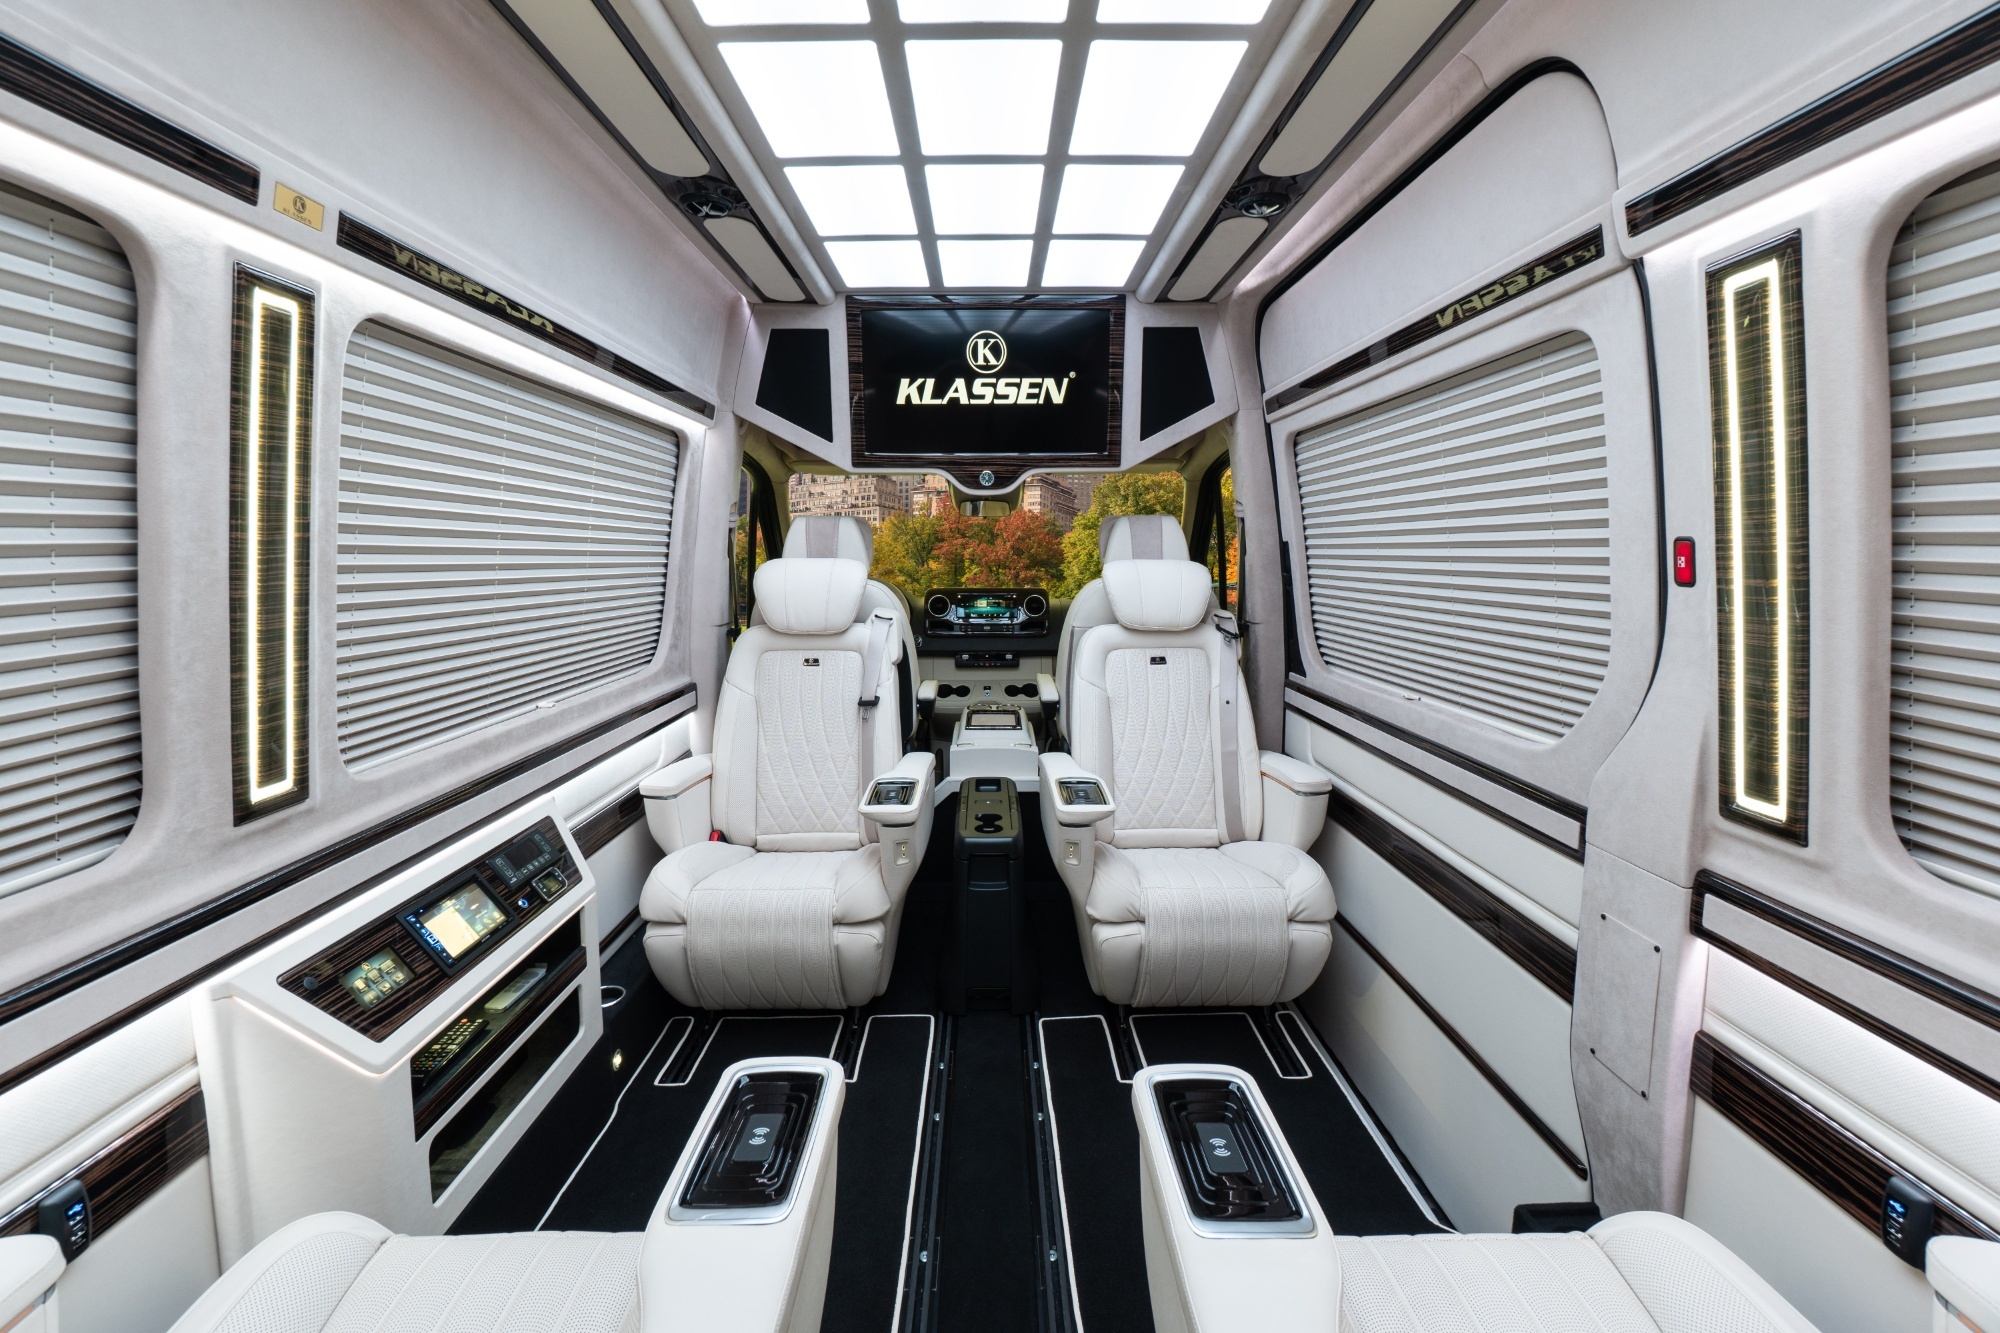 2022 Mercedes Sprinter VIP KING VAN NEW Full Review Interior Exterior